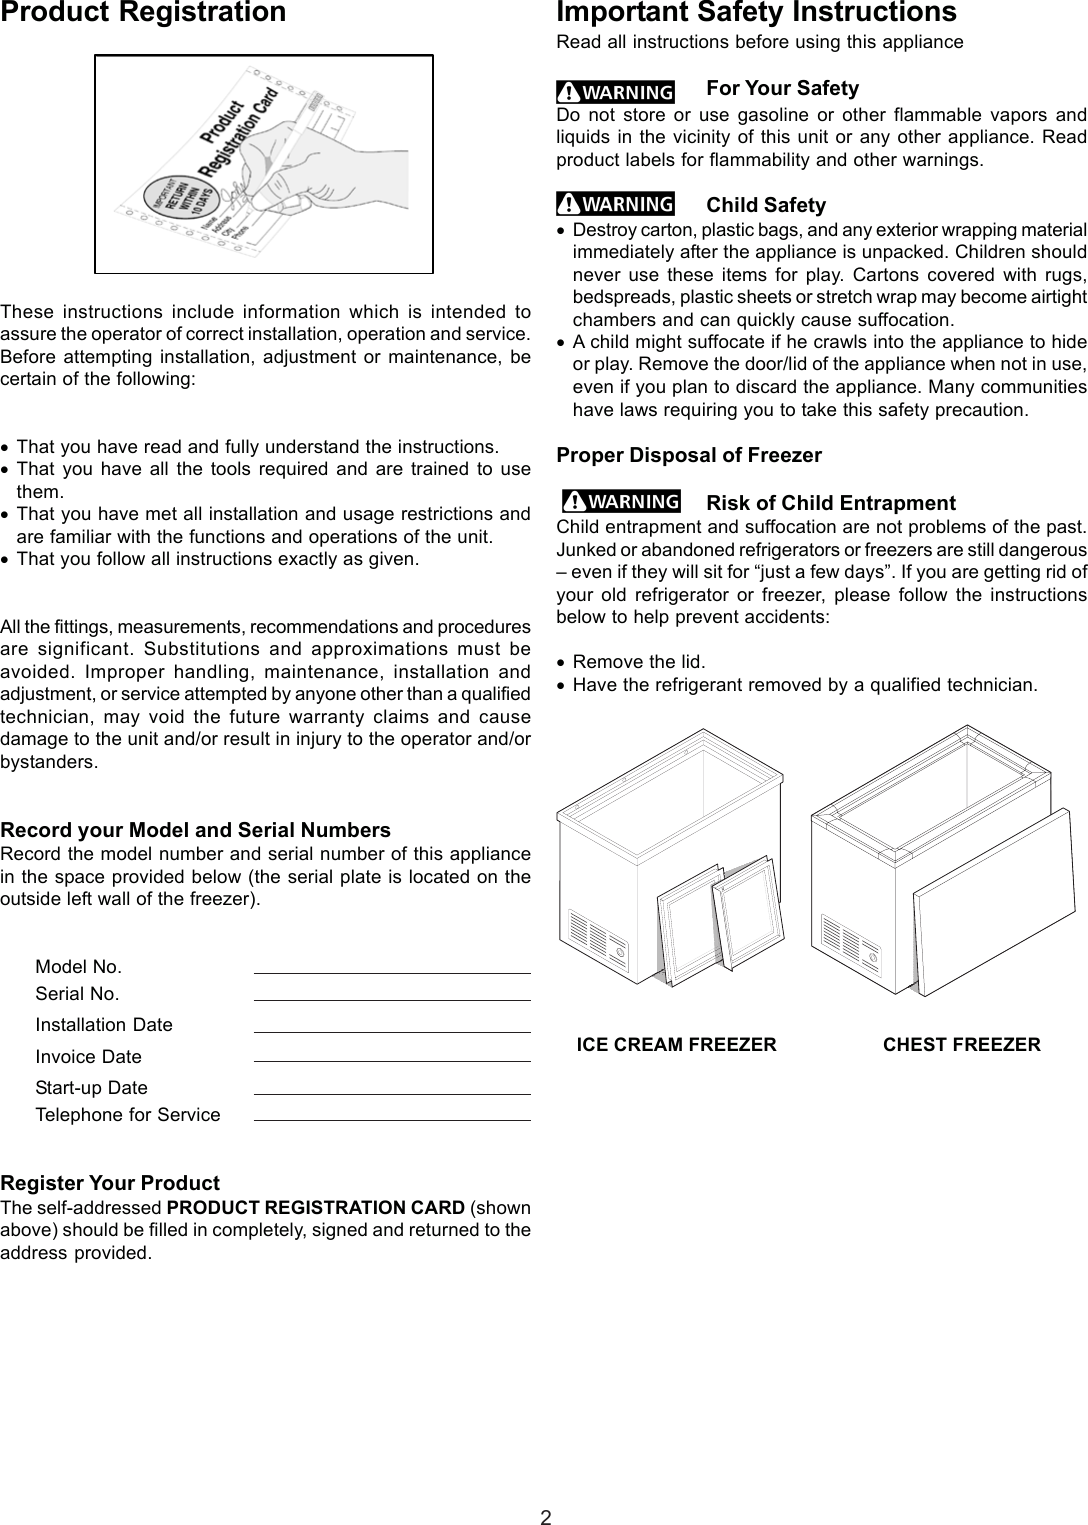 Page 2 of 11 - Frigidaire Frigidaire-7-Cf-Chest-Freezer-297068500-Users-Manual- 297068500  Frigidaire-7-cf-chest-freezer-297068500-users-manual